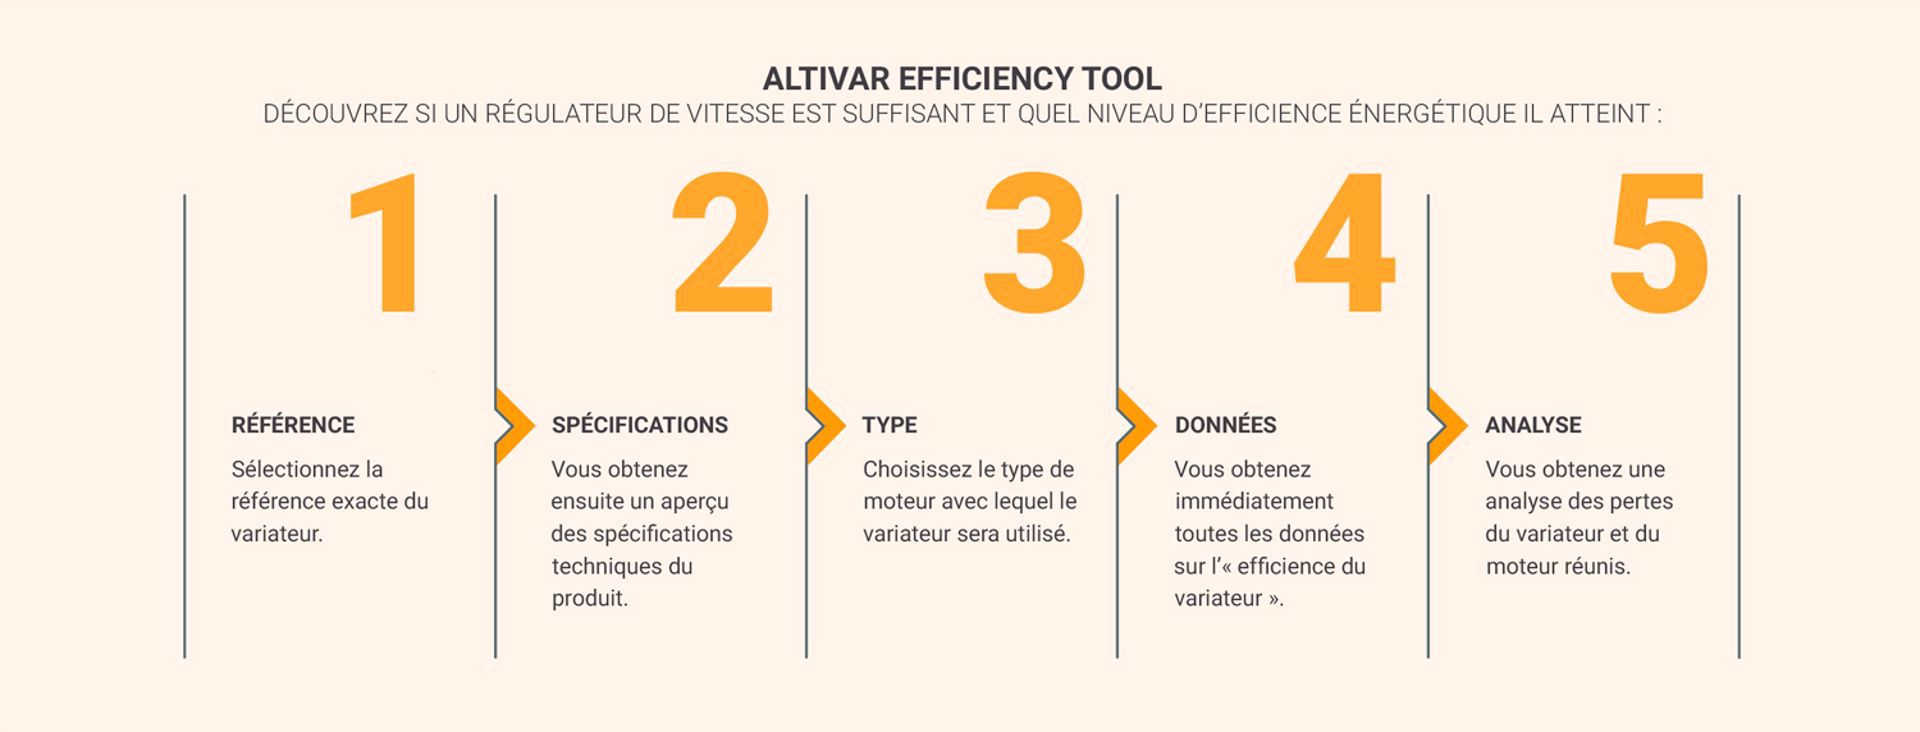 Altivar Efficiency Tool - 5 étapes